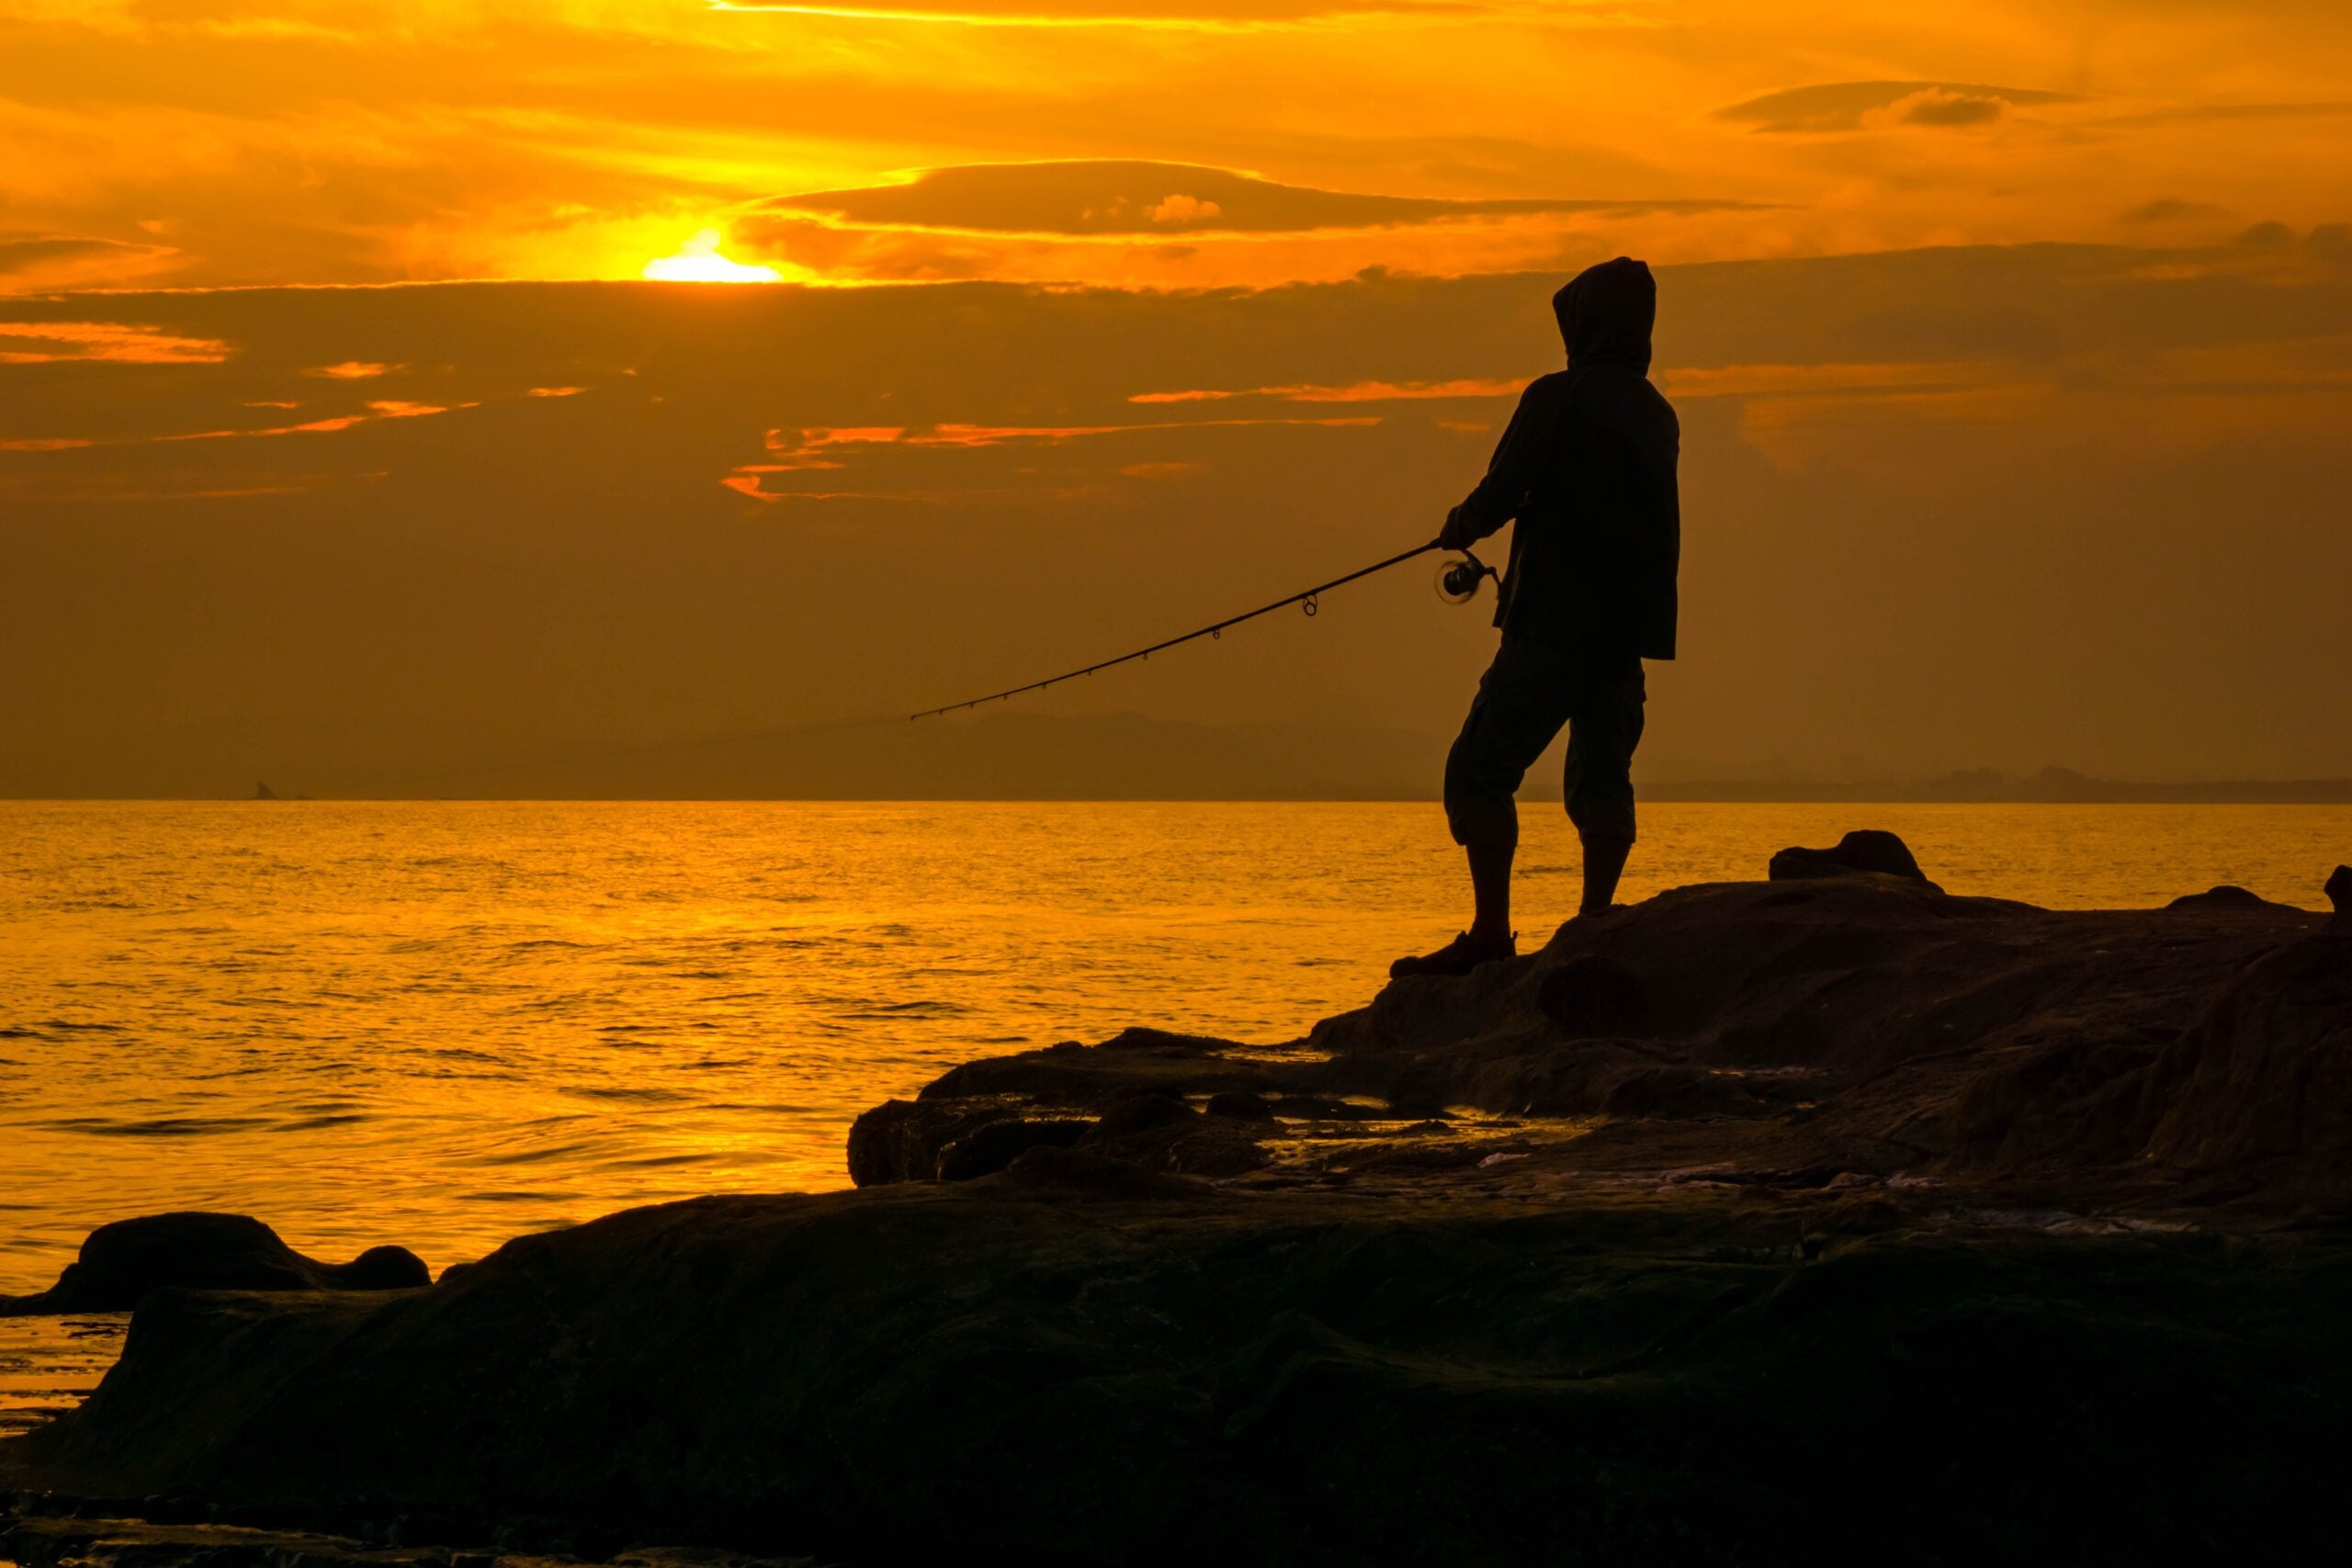 Bass Fishing Shirt for Men Long Sleeve Sun Protection UV UPF 30+ T